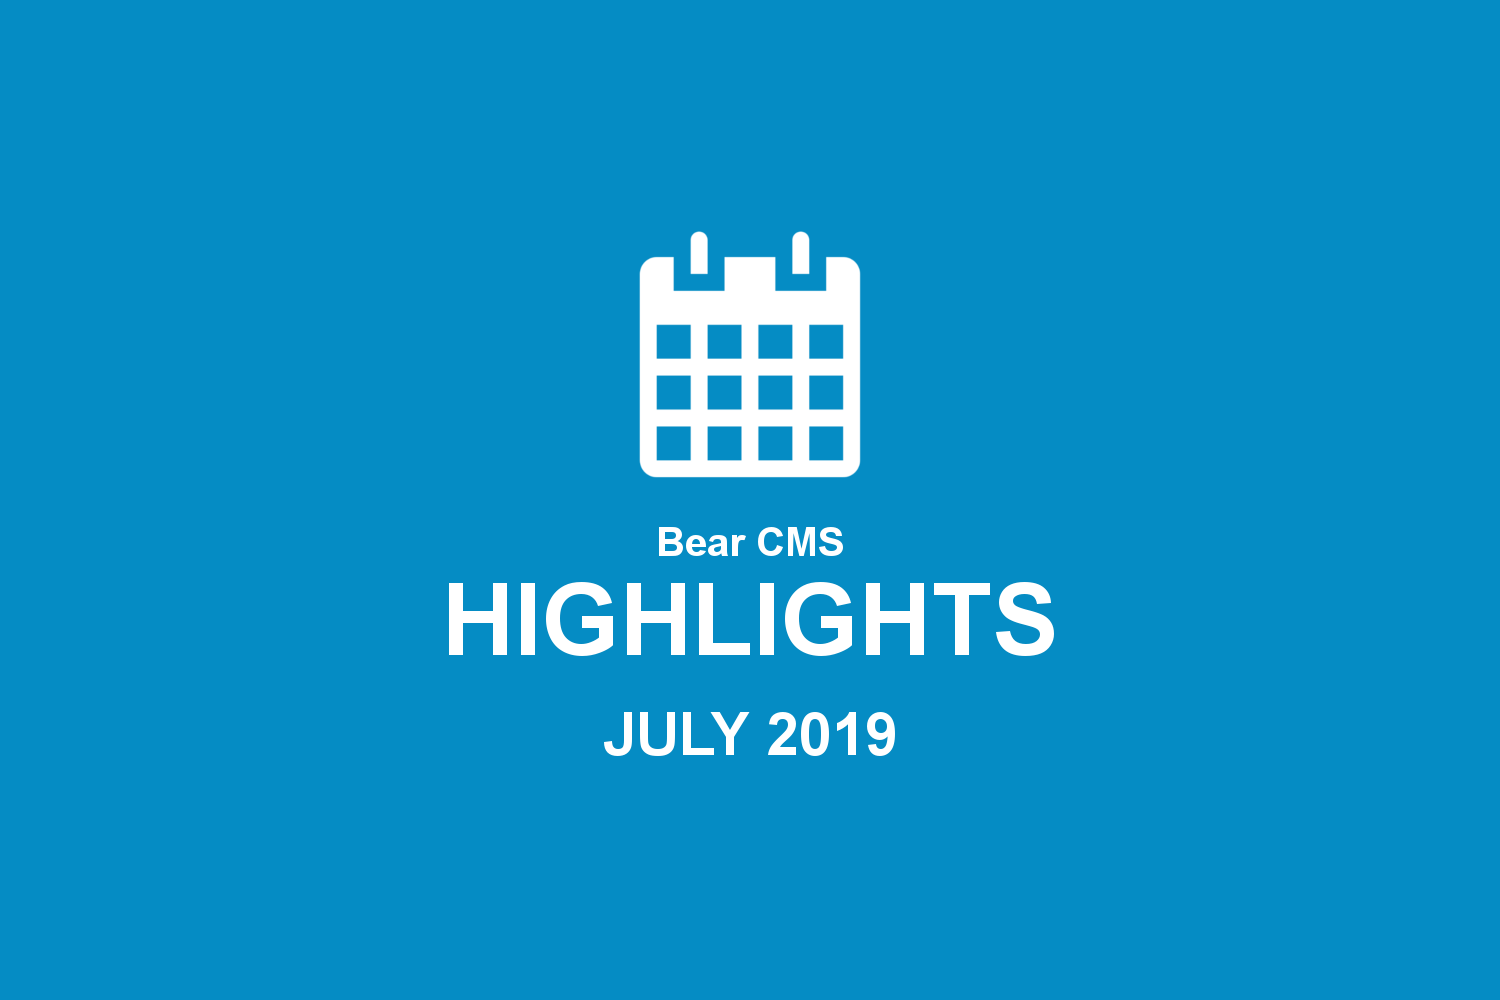 Bear CMS highlights (July 2019)